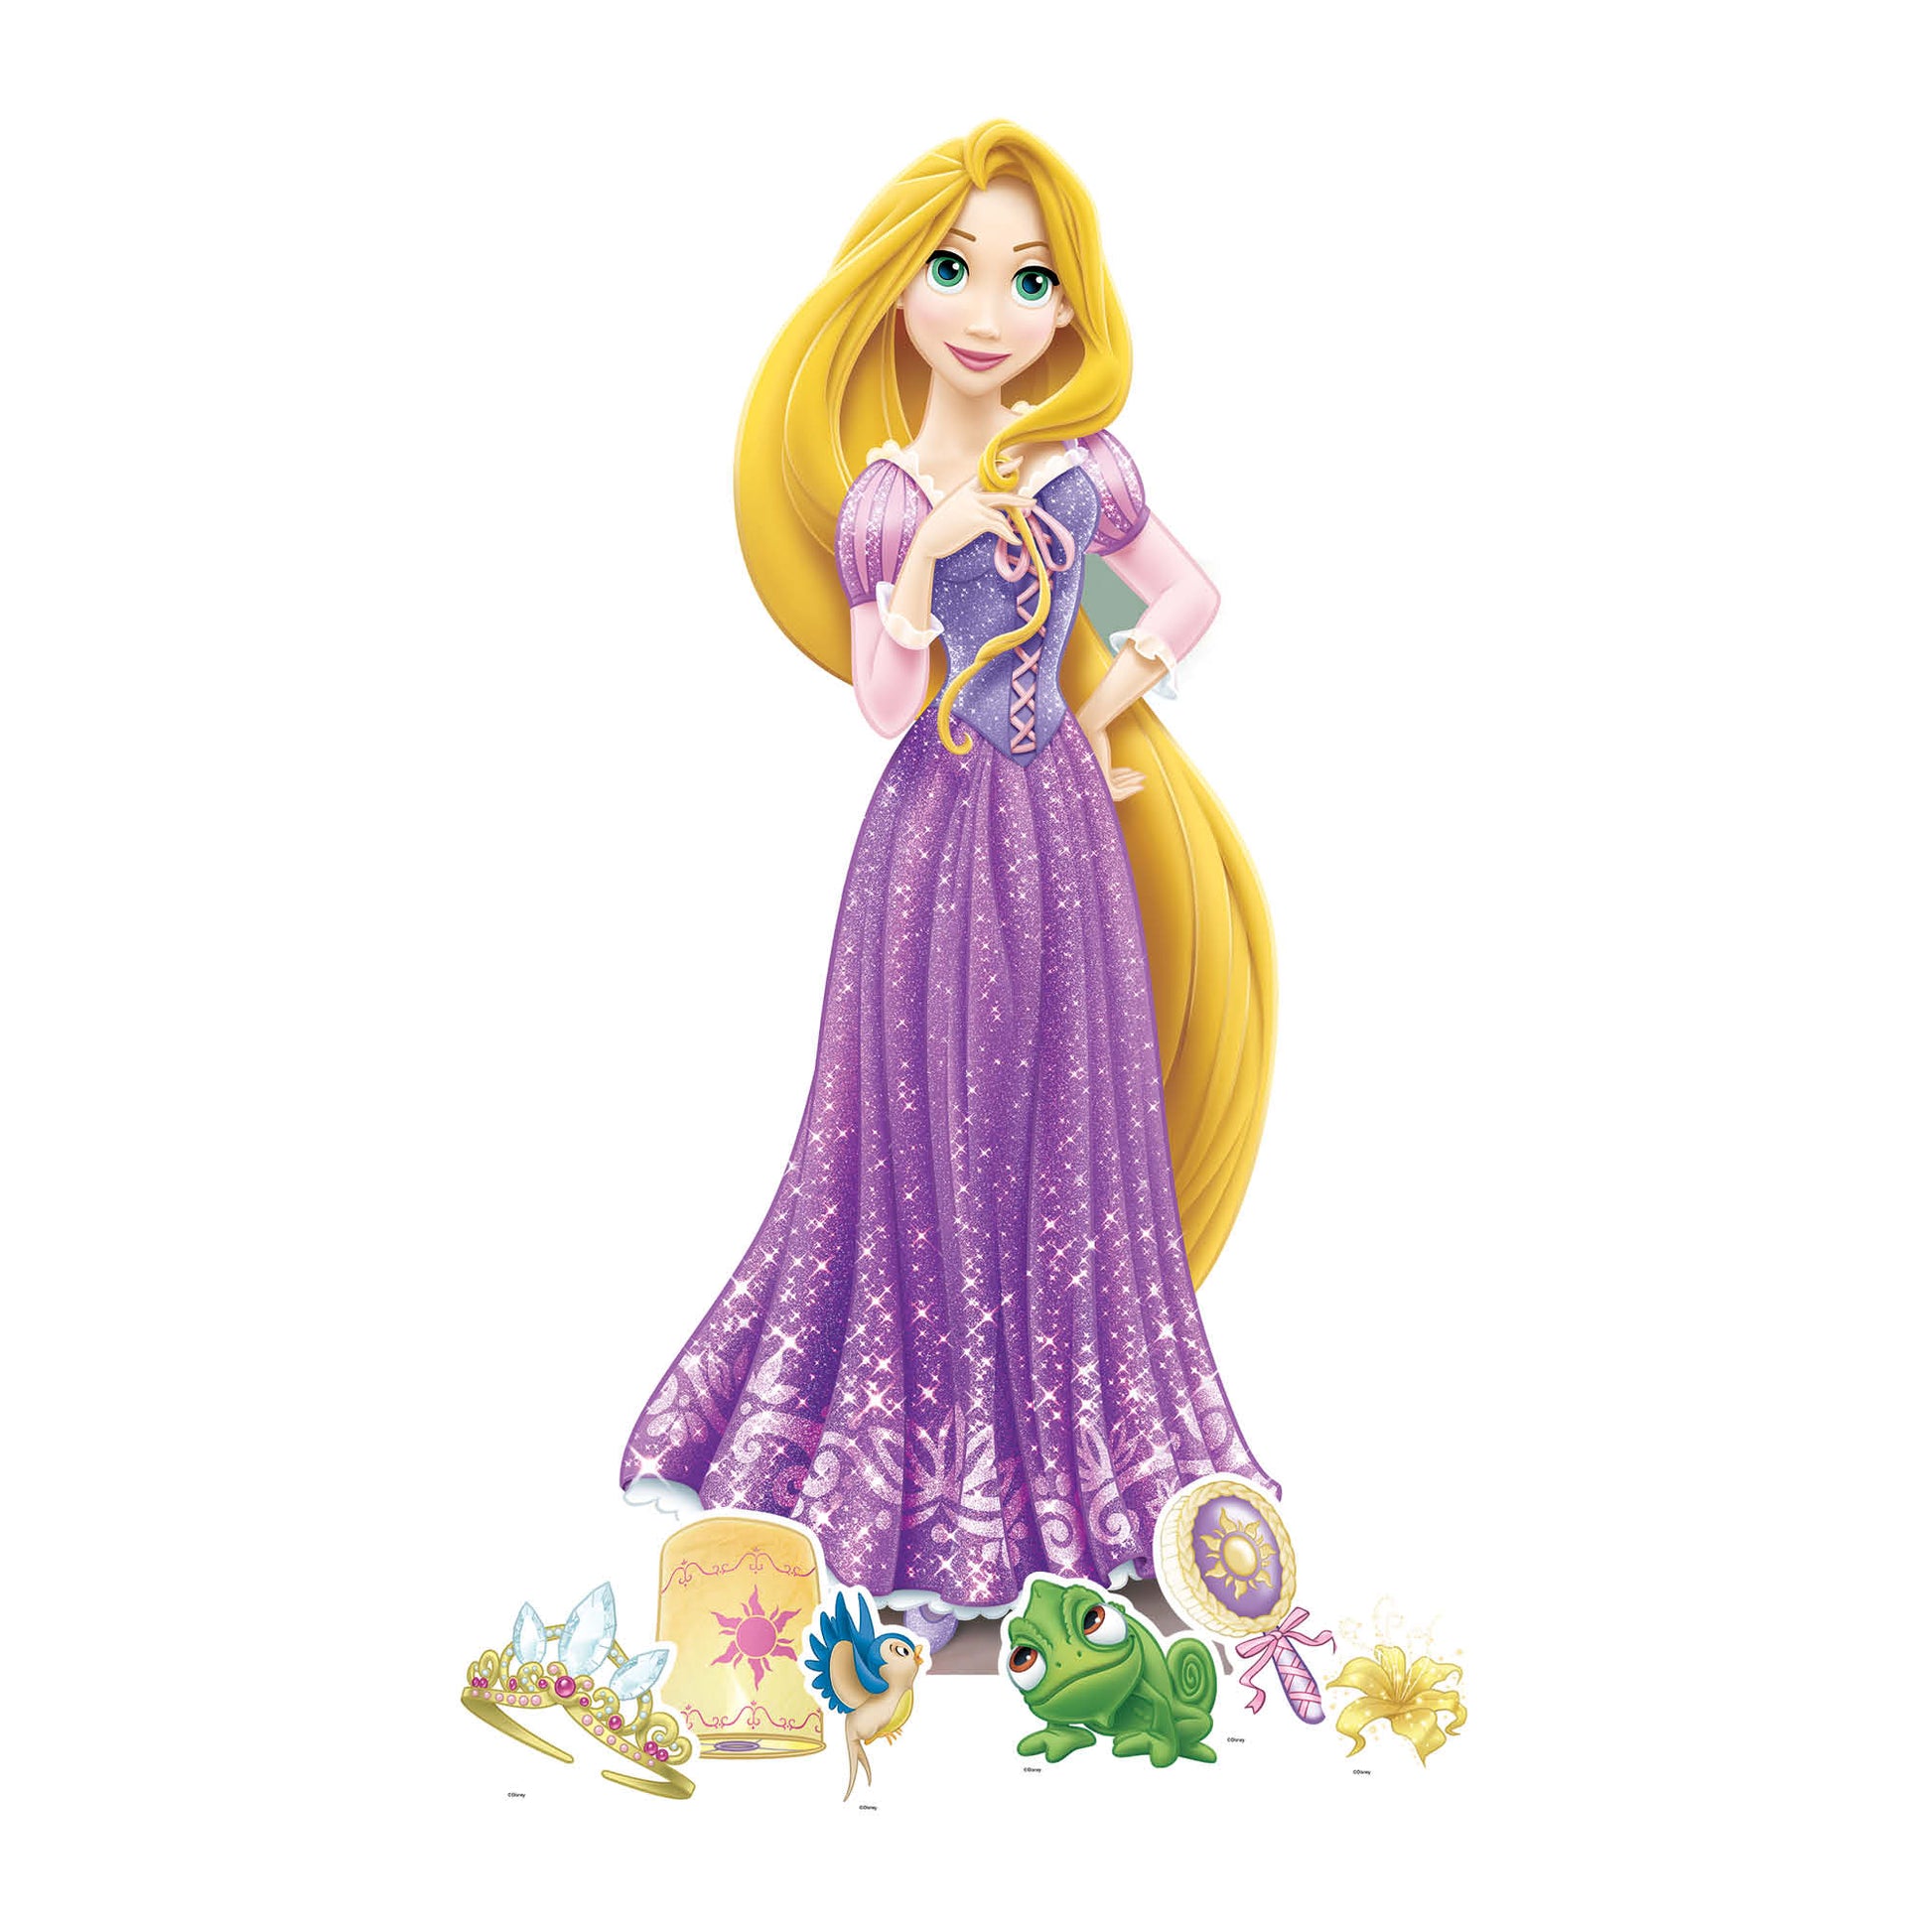 Elsa Violet Dress from Frozen 2 Official Disney Cardboard Cutout / Standee